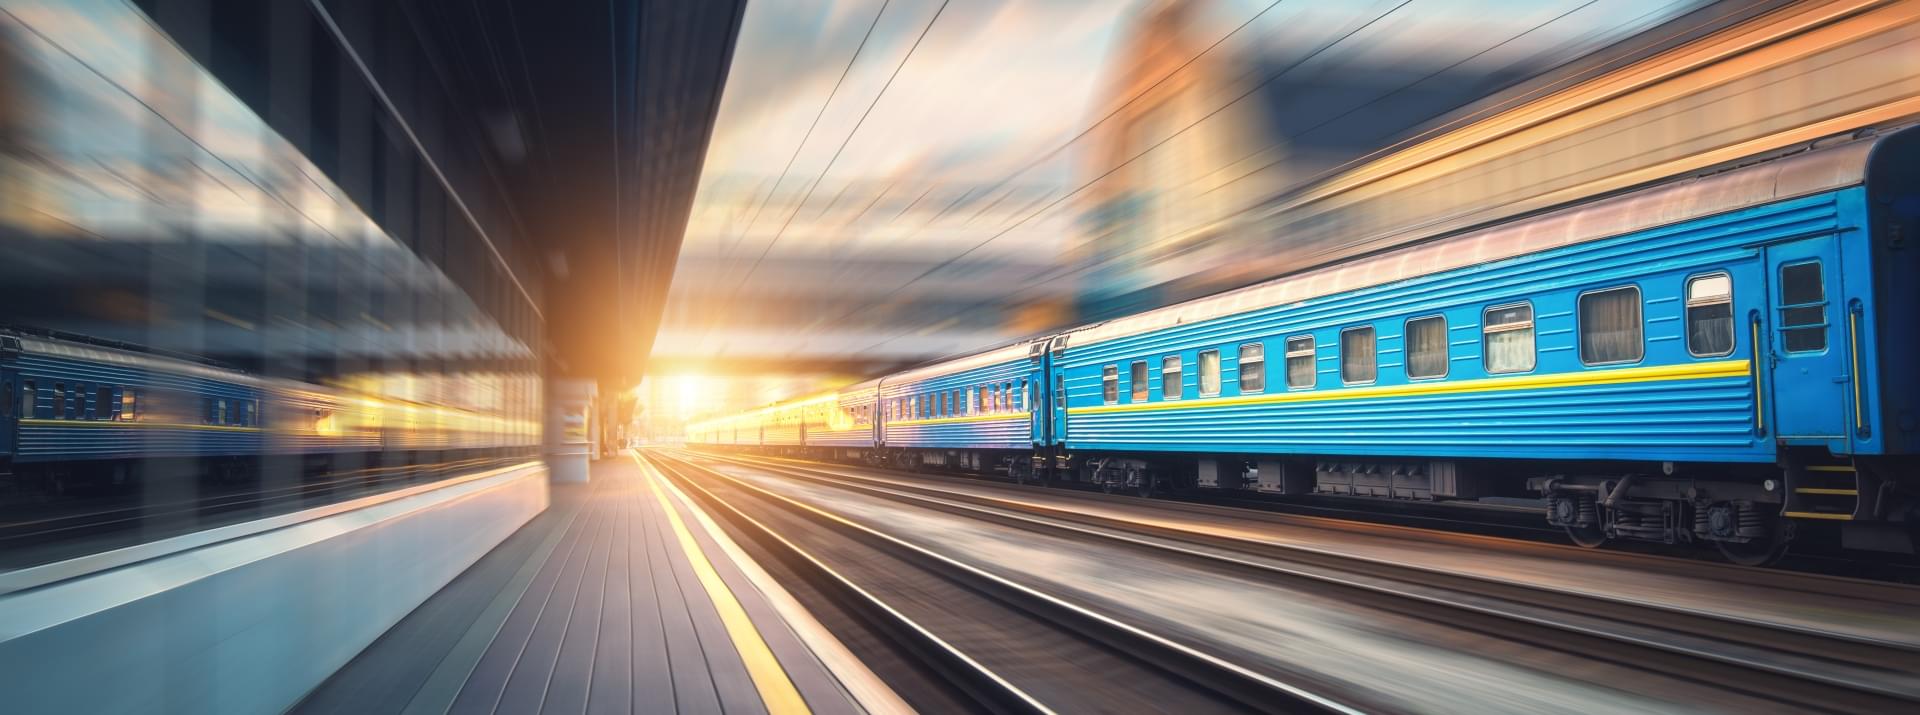 Fast moving blue passenger train